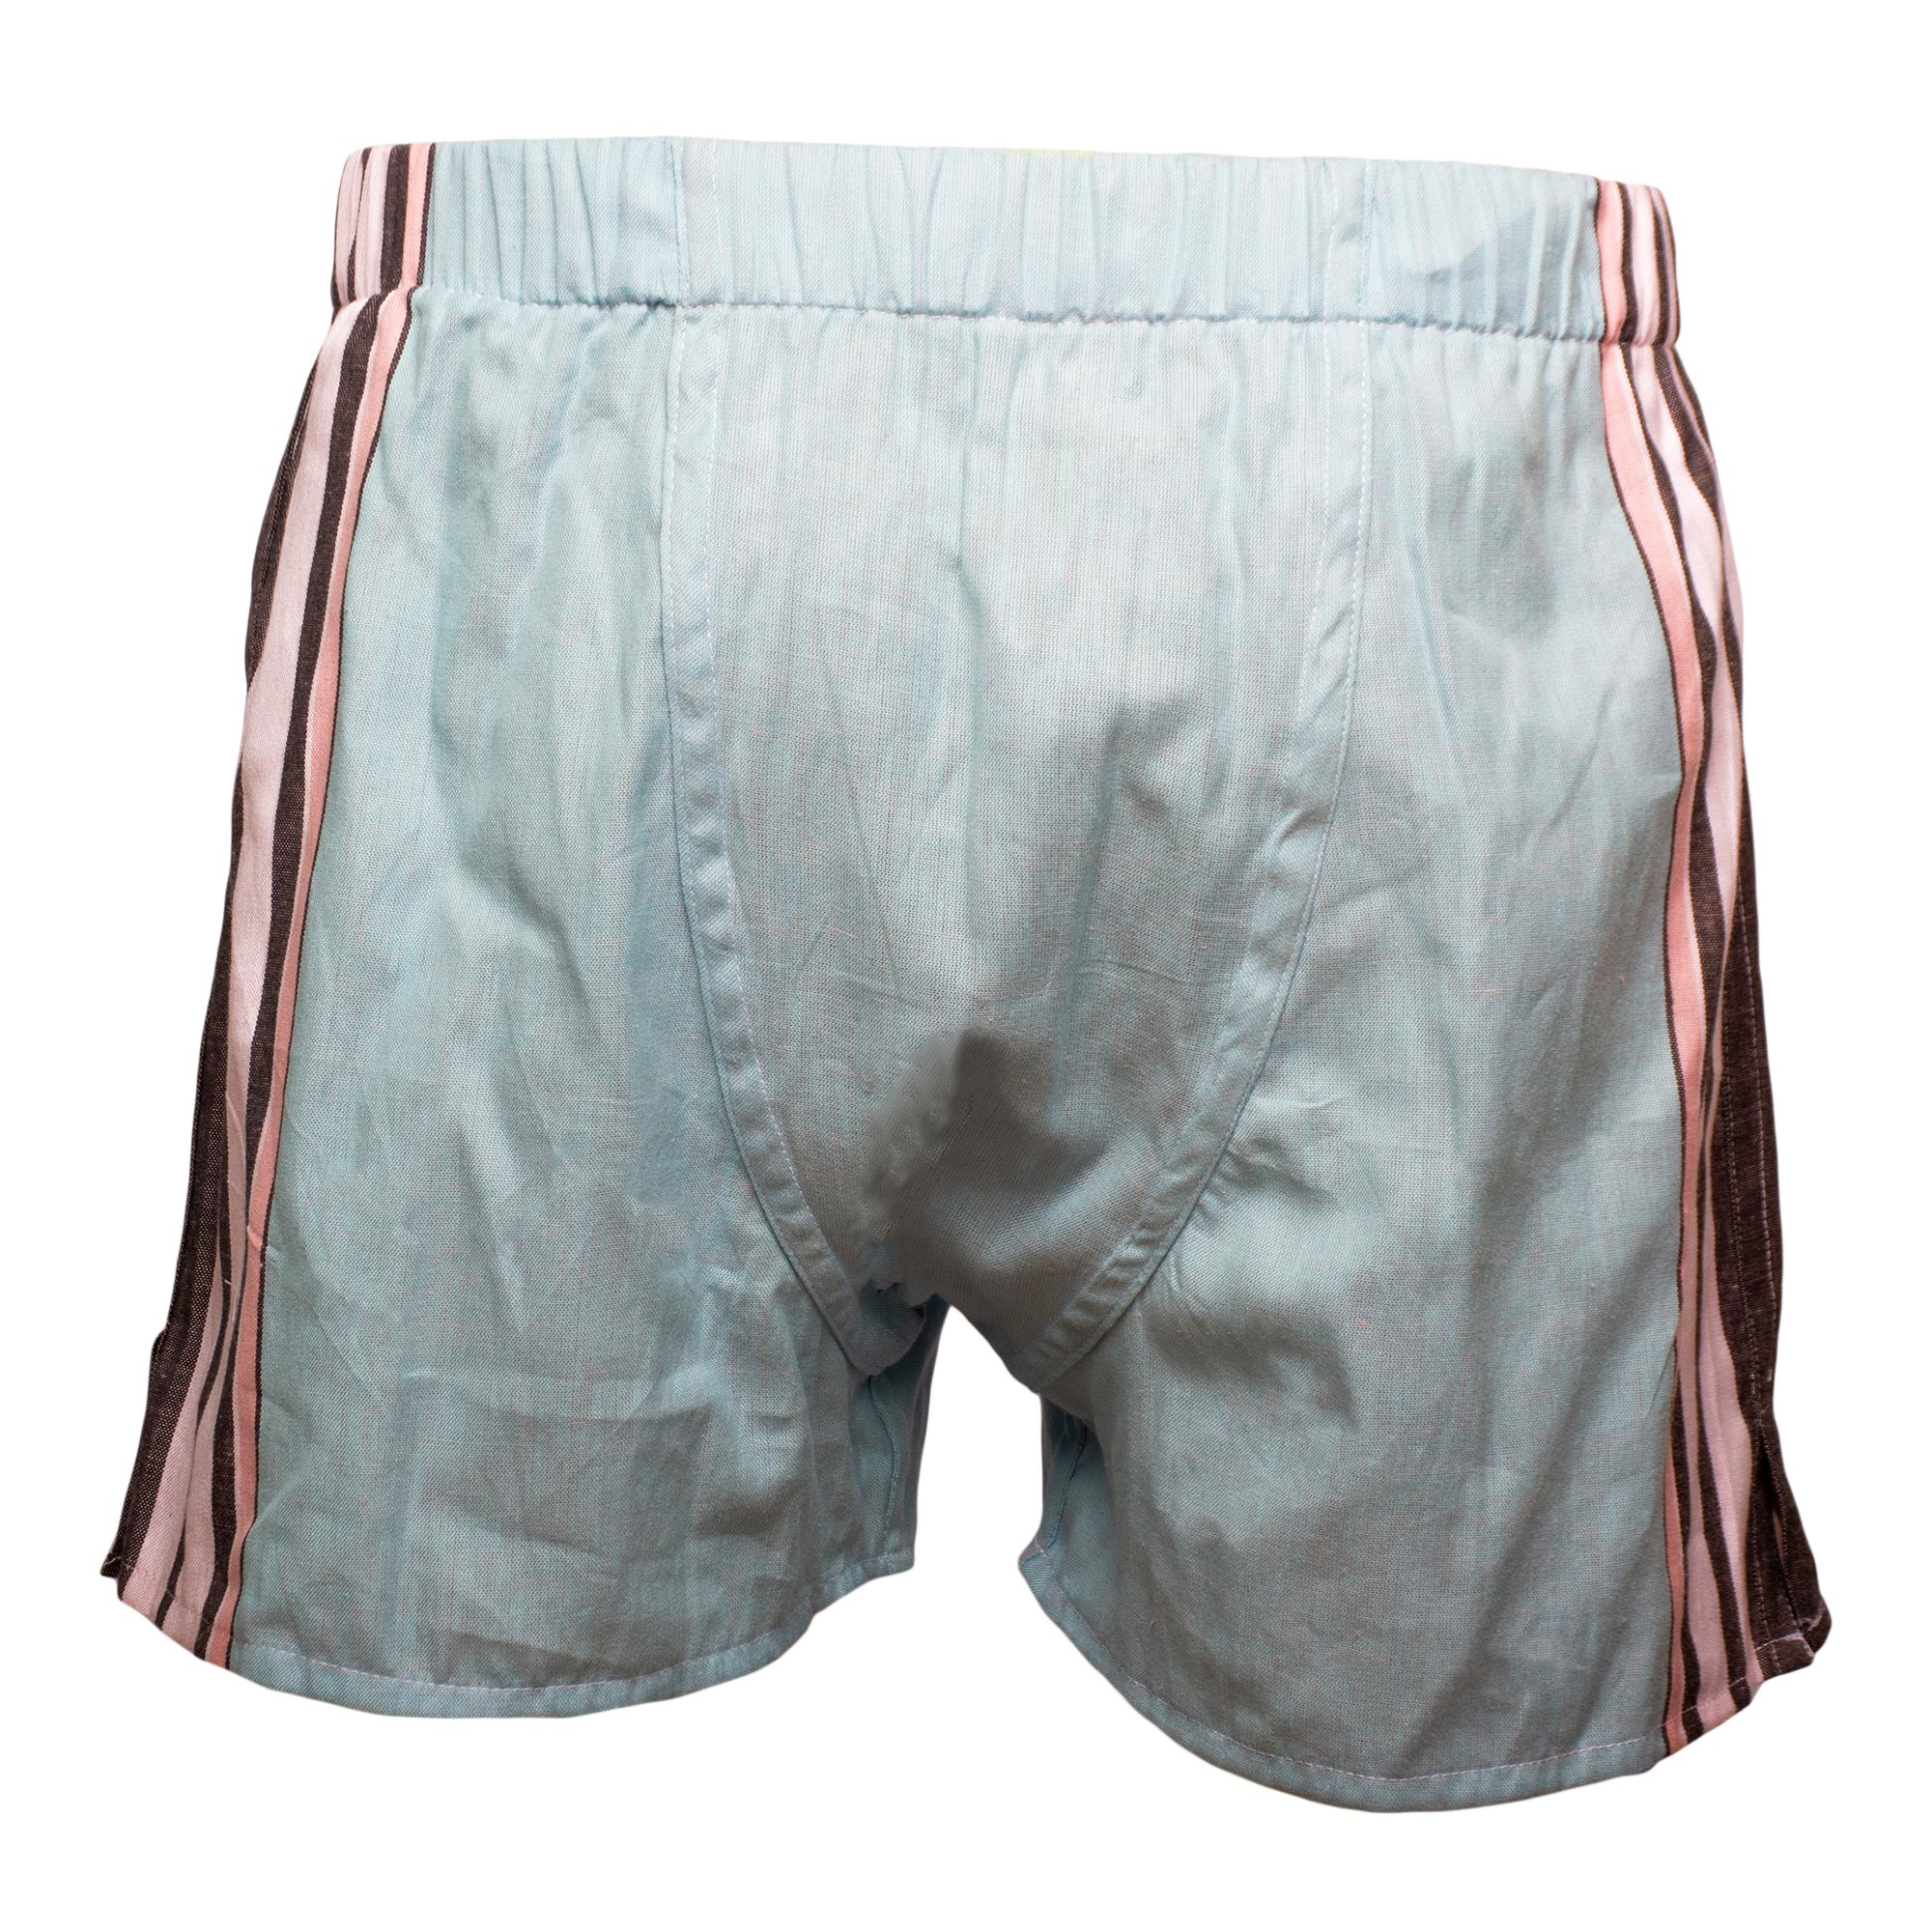 Men’s Luxury Boxer shorts